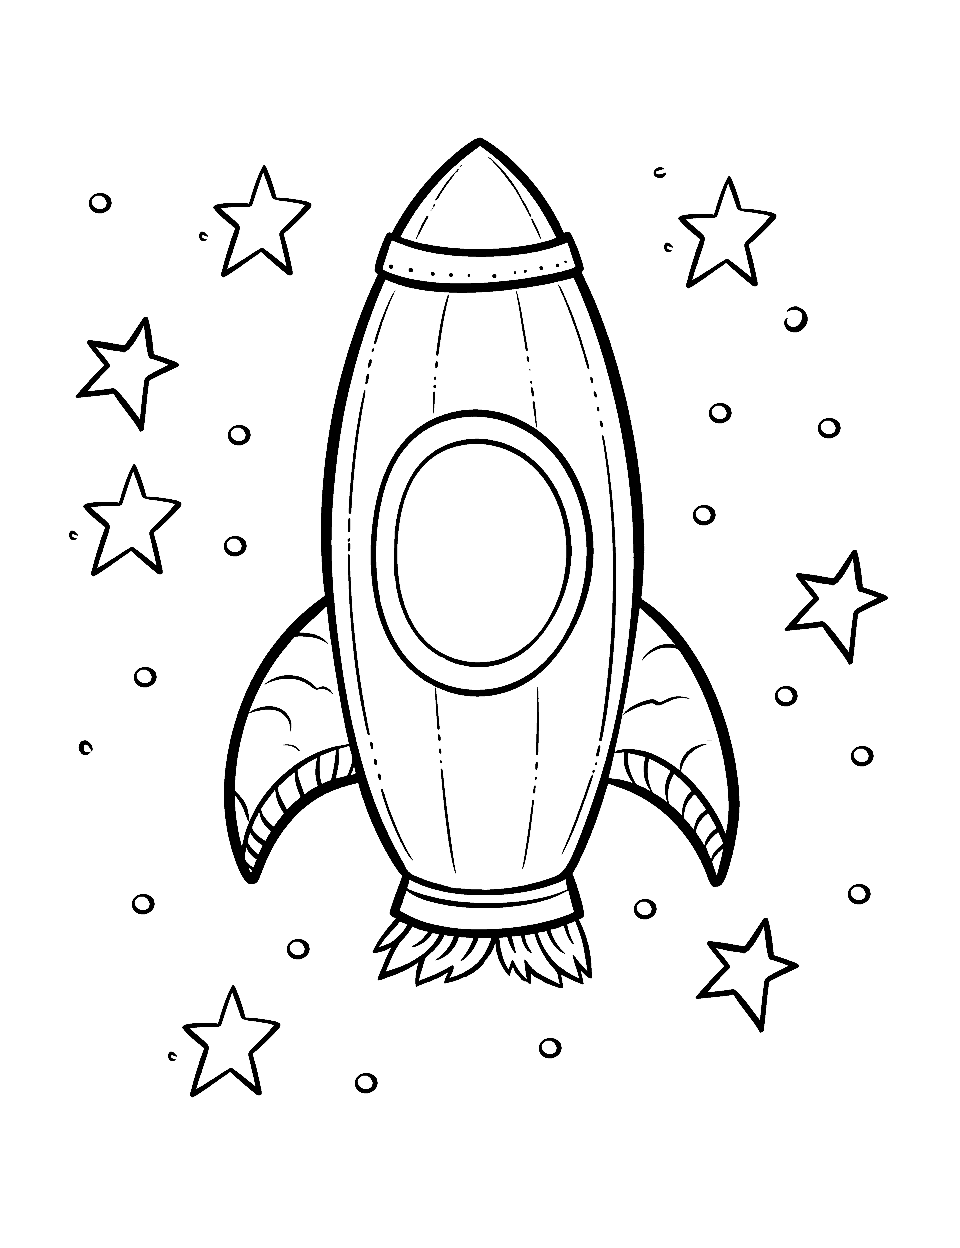 Fruit Rocket Coloring Page - A rocket ship shaped like a peeled banana, blasting off.